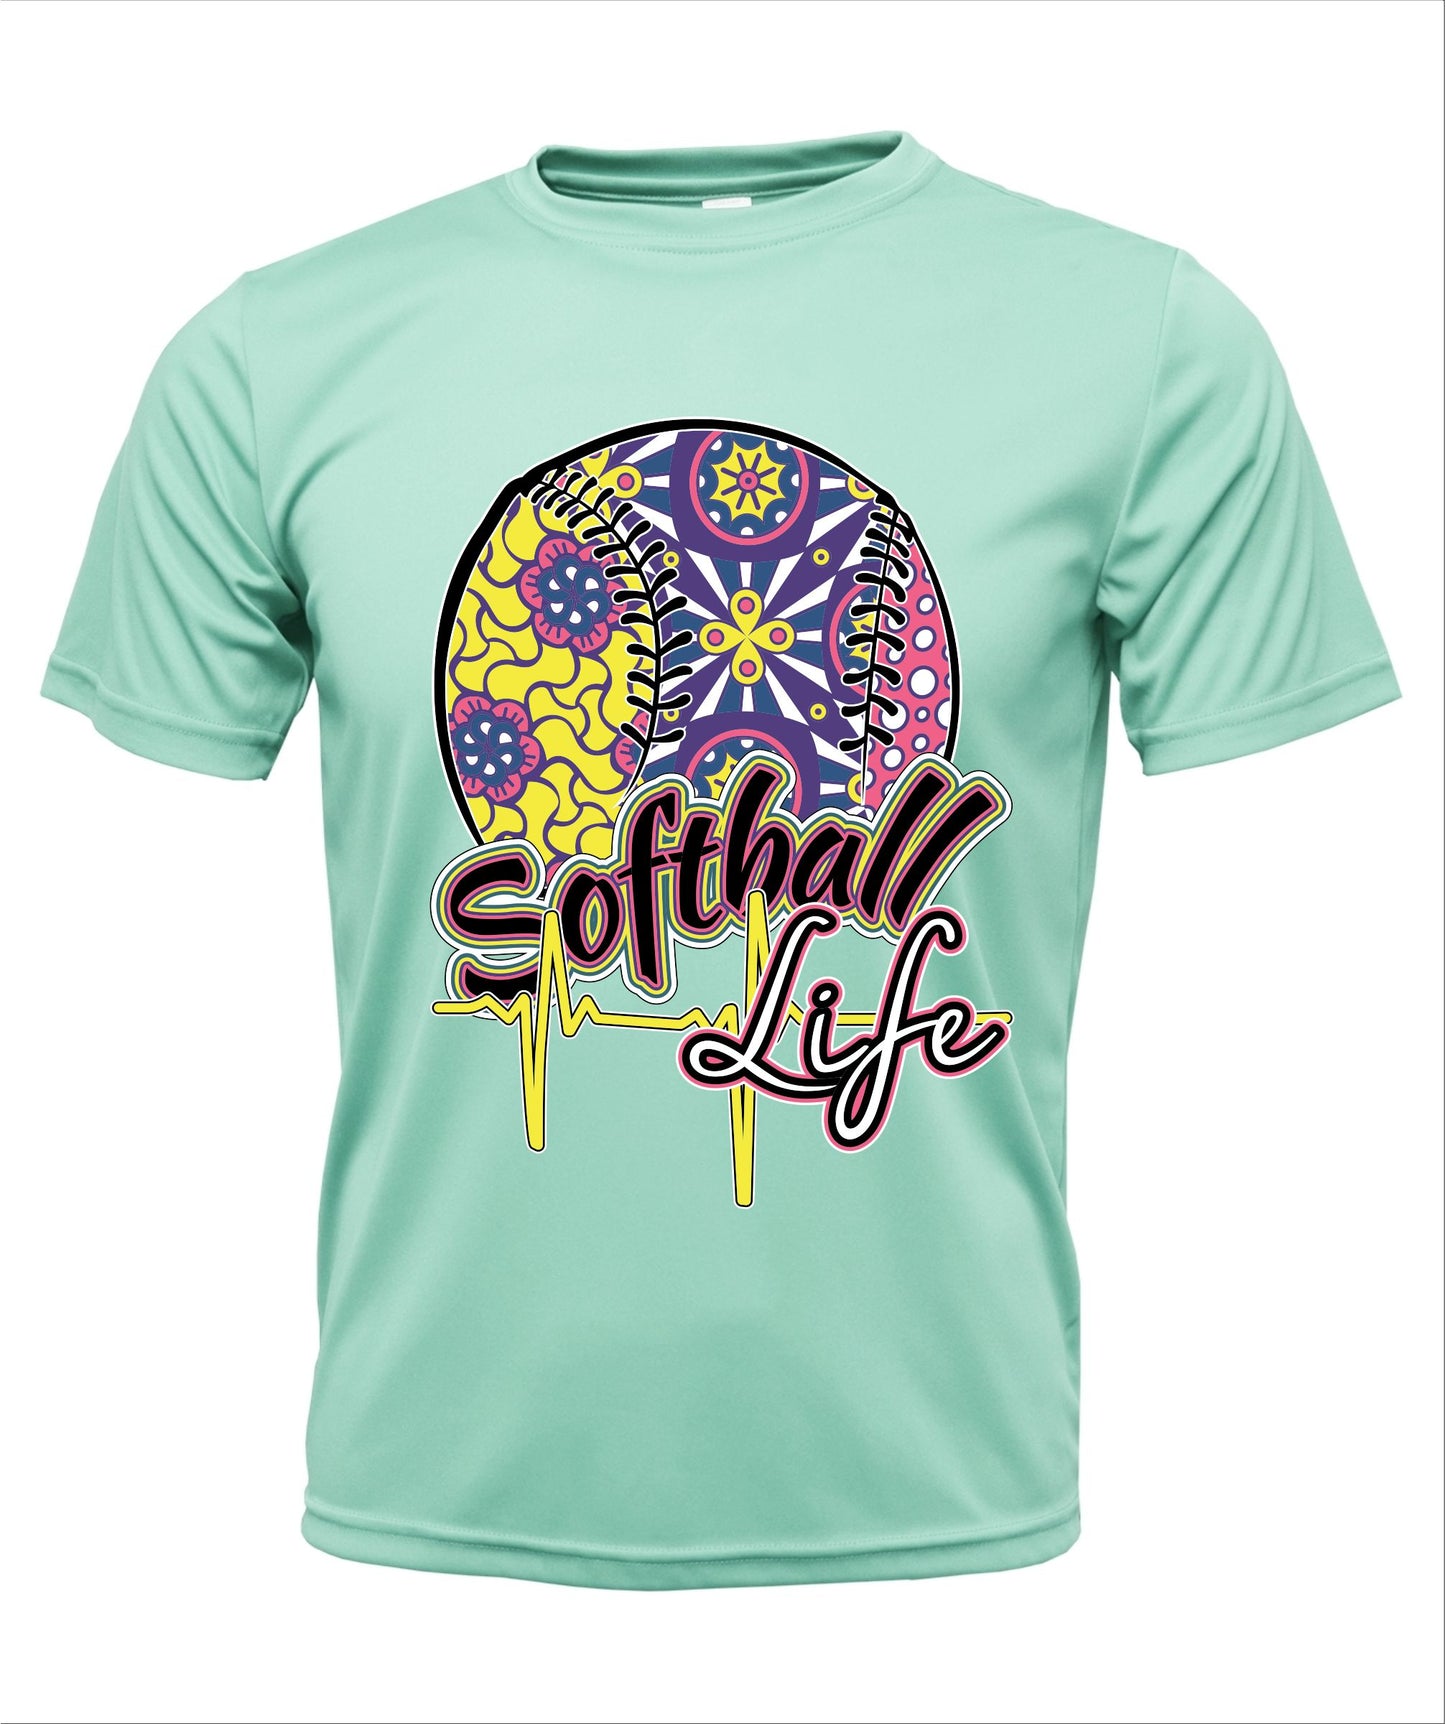 Softball "Life" Dri-Fit T-Shirt